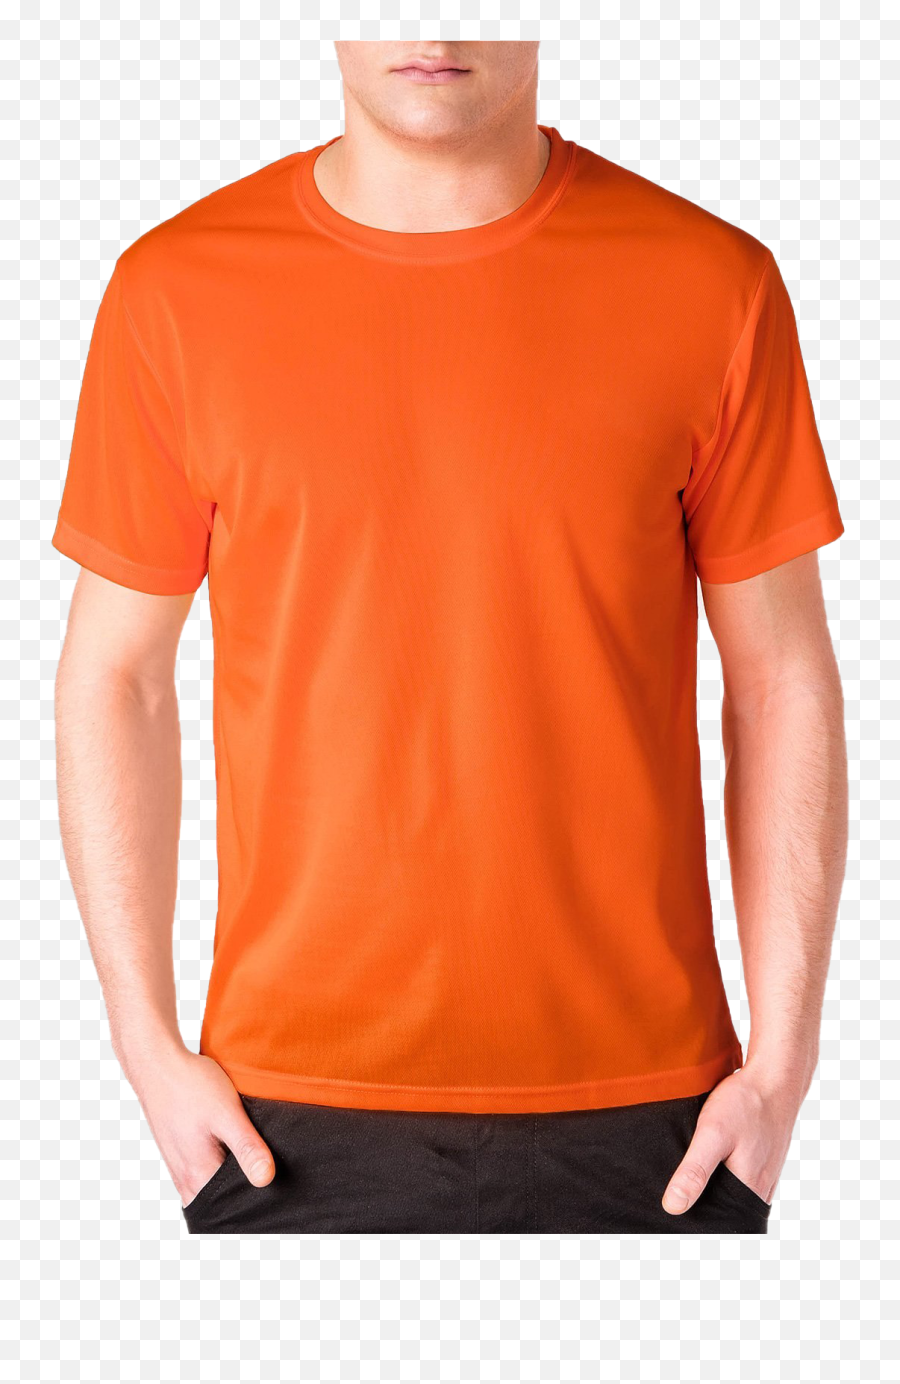 Plain Orange T Png Blank Shirt